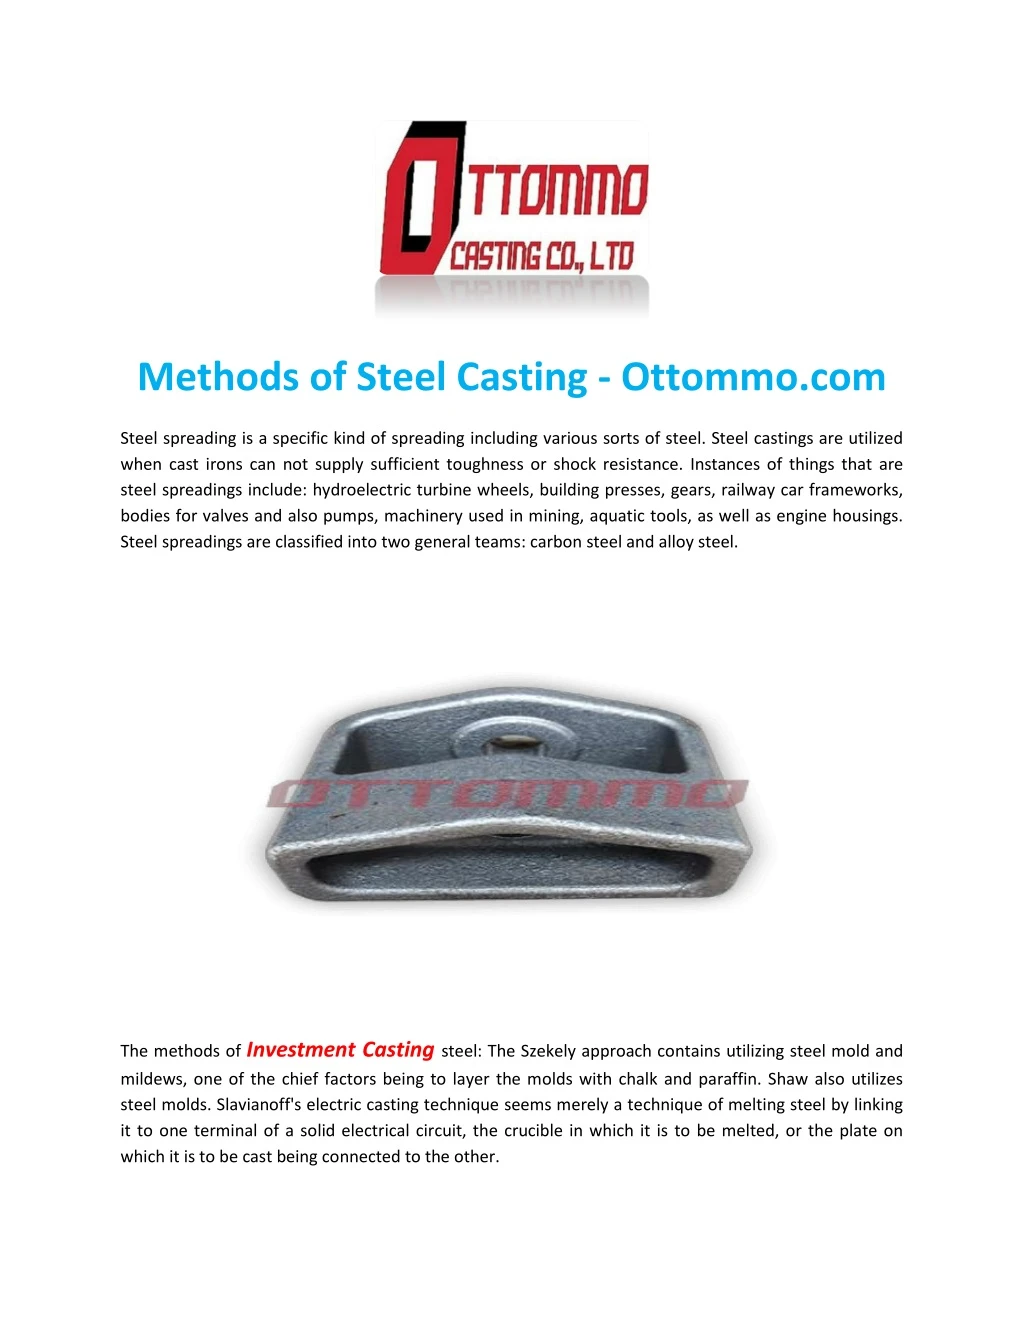 methods of steel casting ottommo com